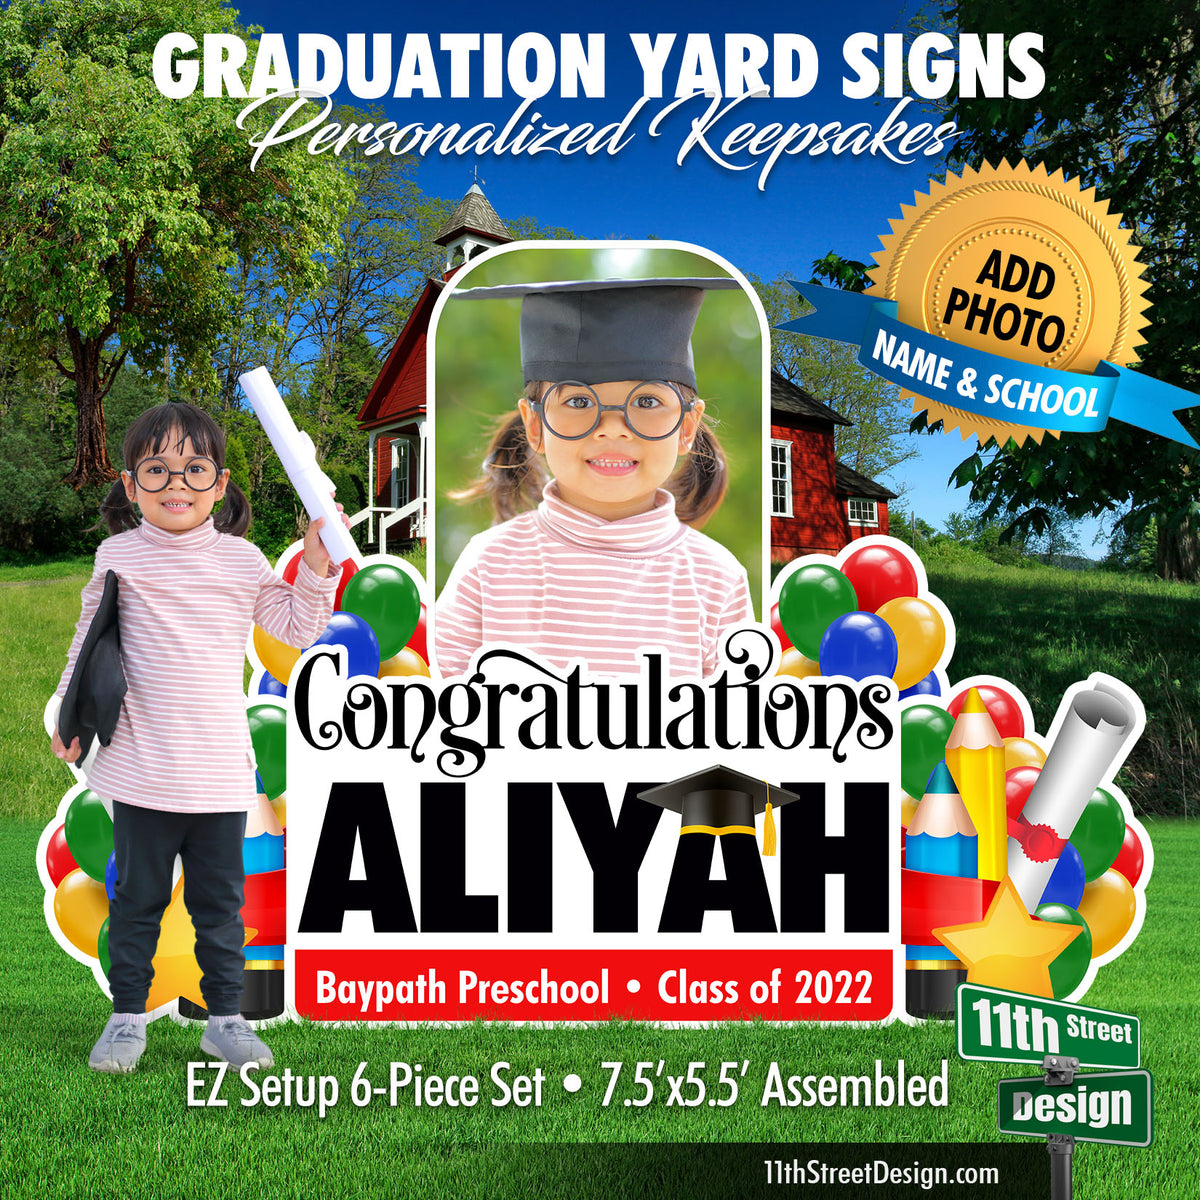 Personalized Preschool &amp; Kindergarten Graduation Lawn Sign Decorations, Yard Card Keepsake With Photo